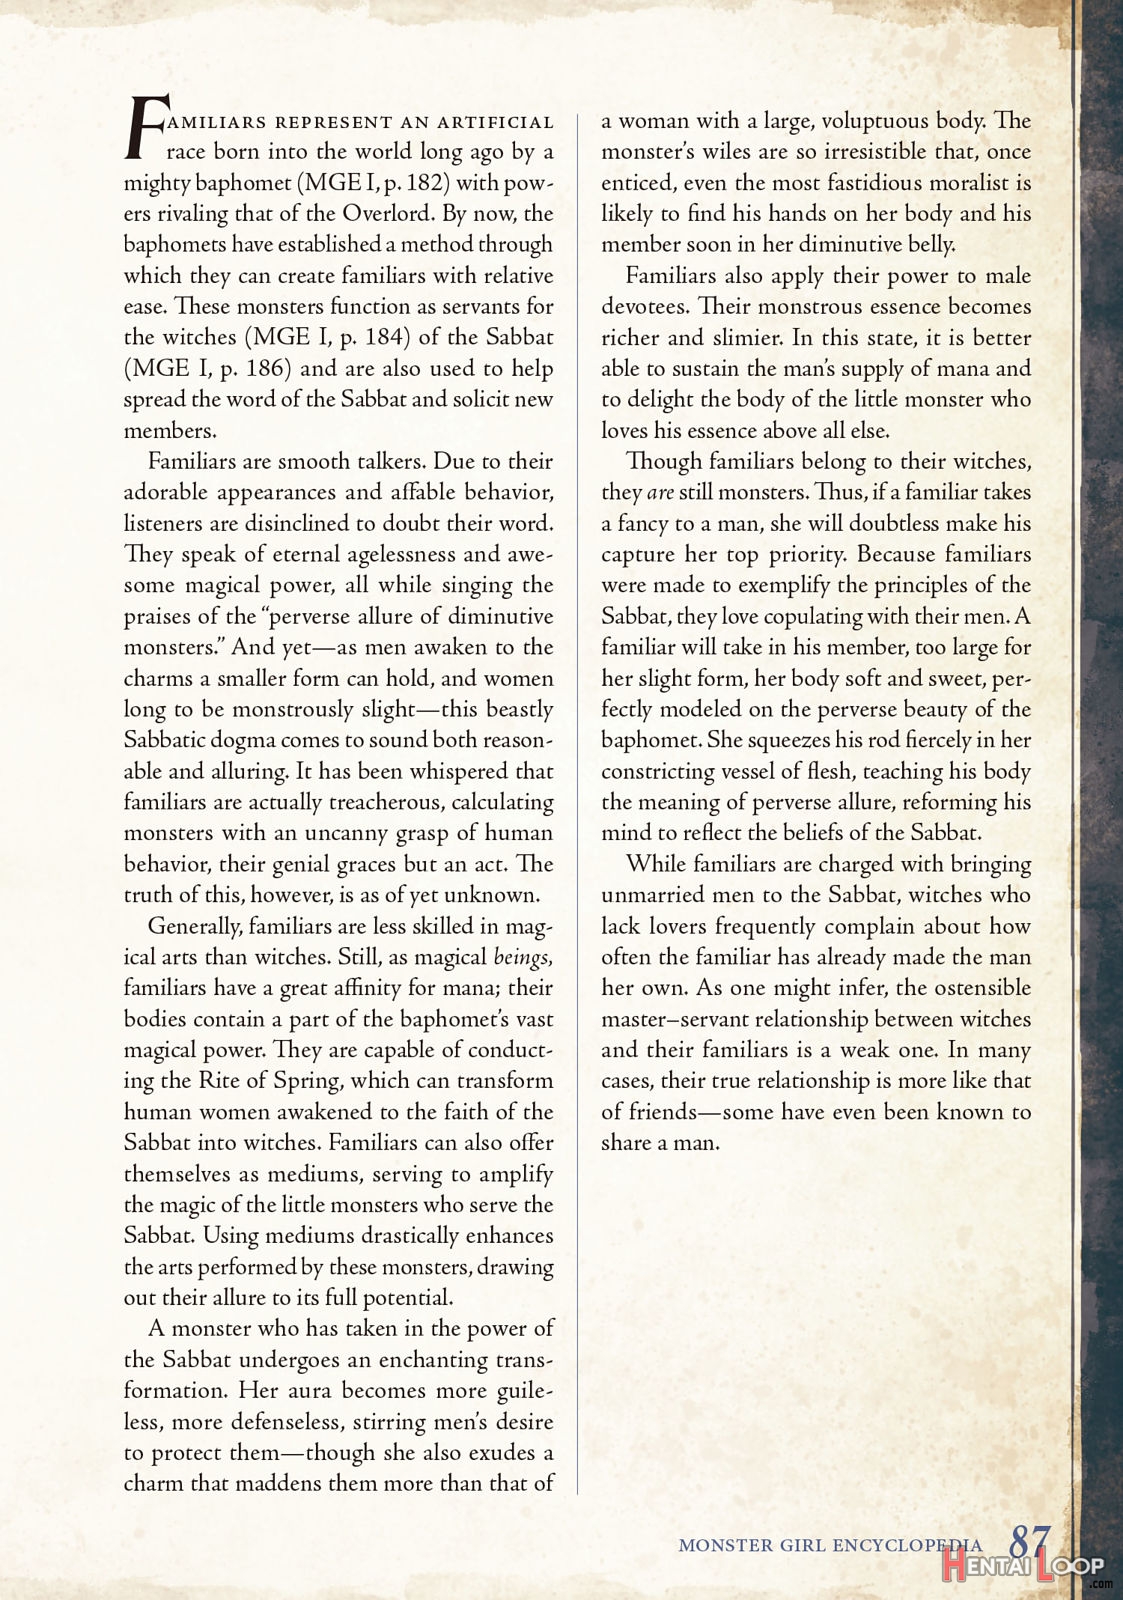 Monster Girl Encyclopedia Vol. 2 page 88